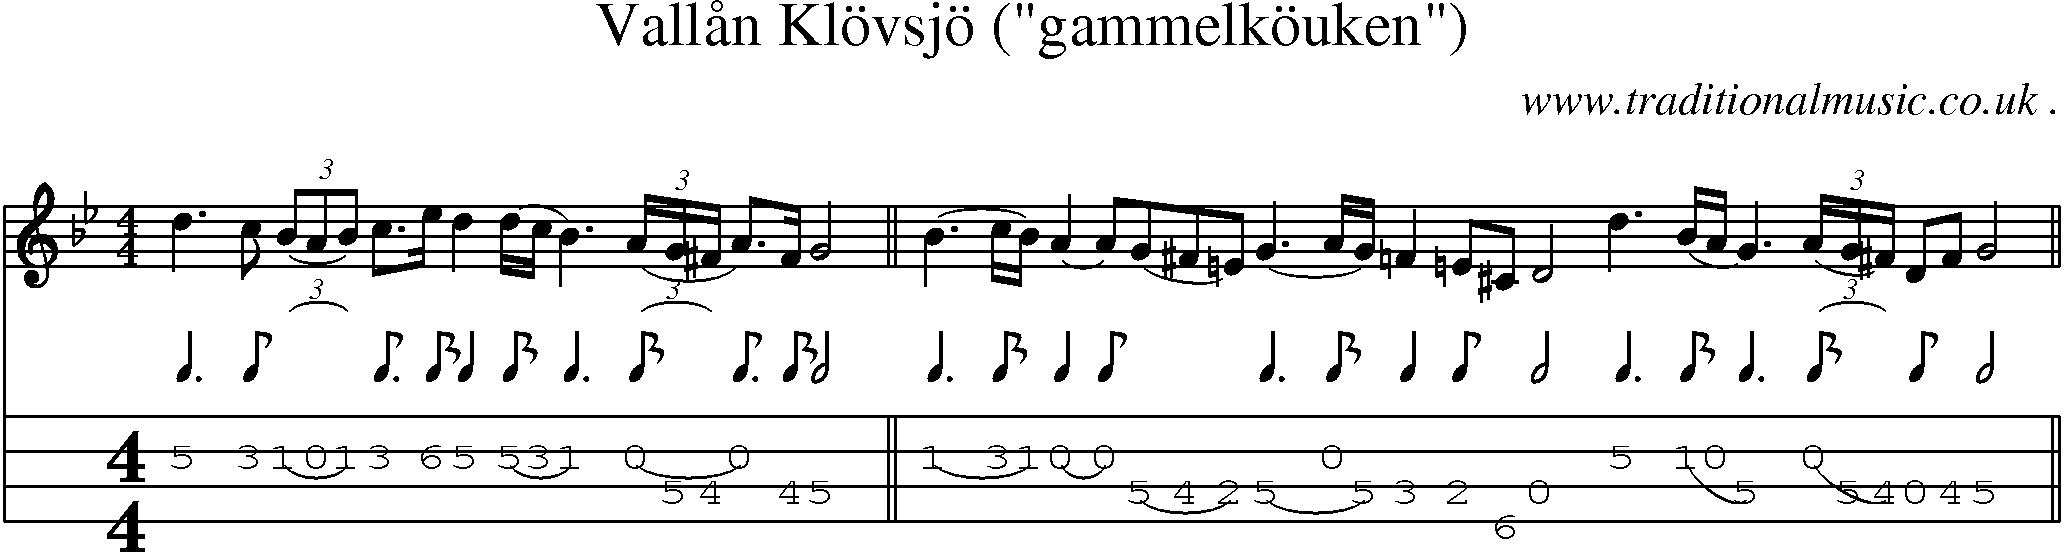 Sheet-Music and Mandolin Tabs for Vallaan Klovsjo (gammelkouken)